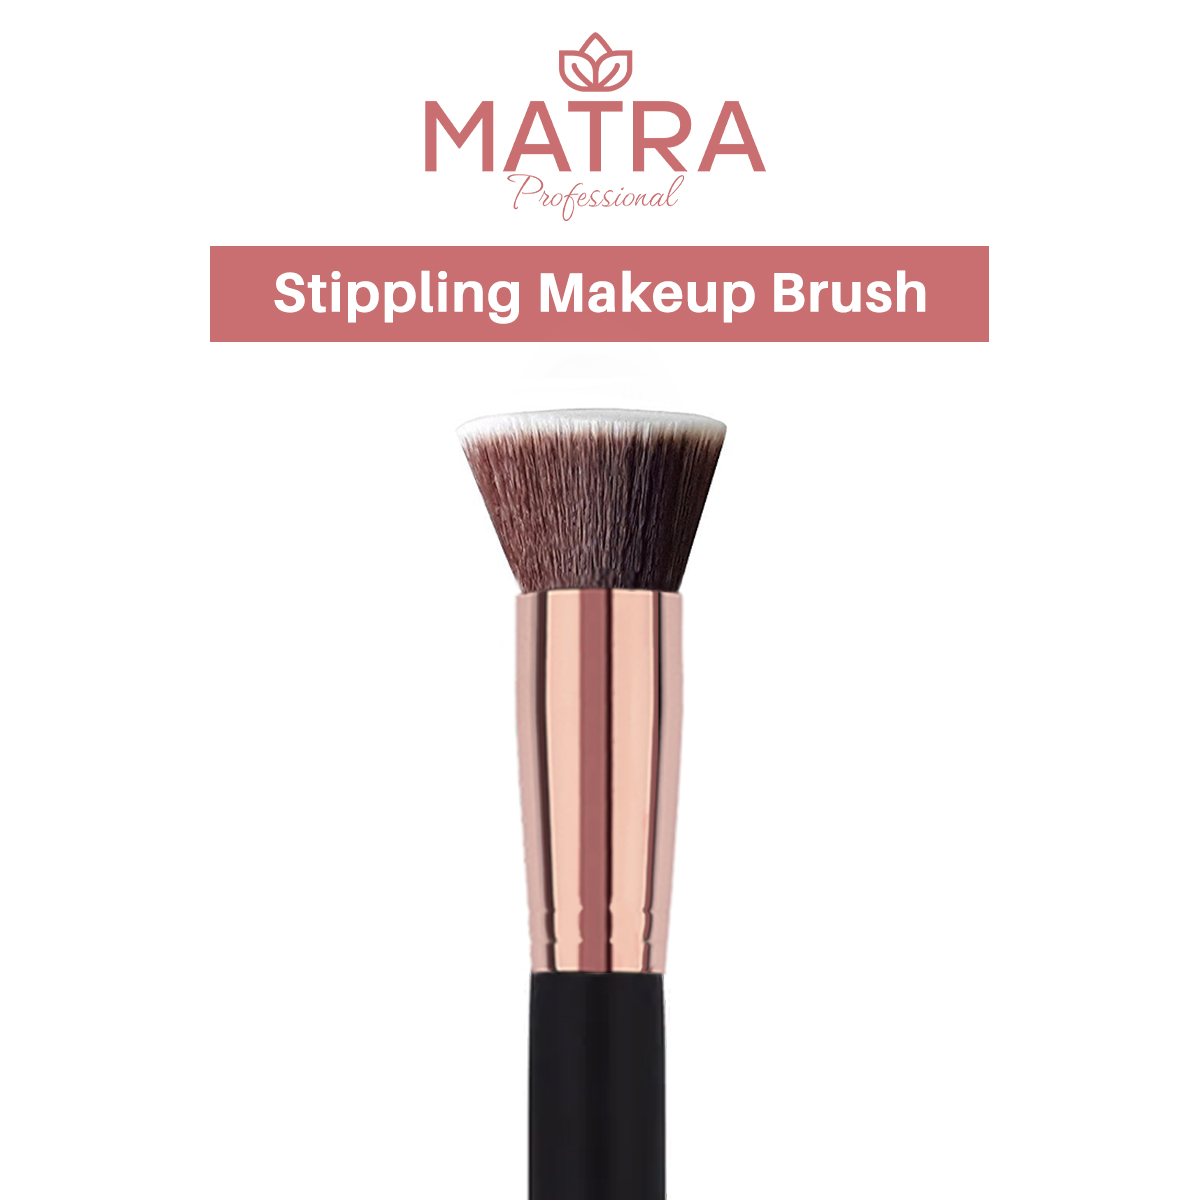 Matra Professional Stippling Makeup Brush - Foundation & Powder 